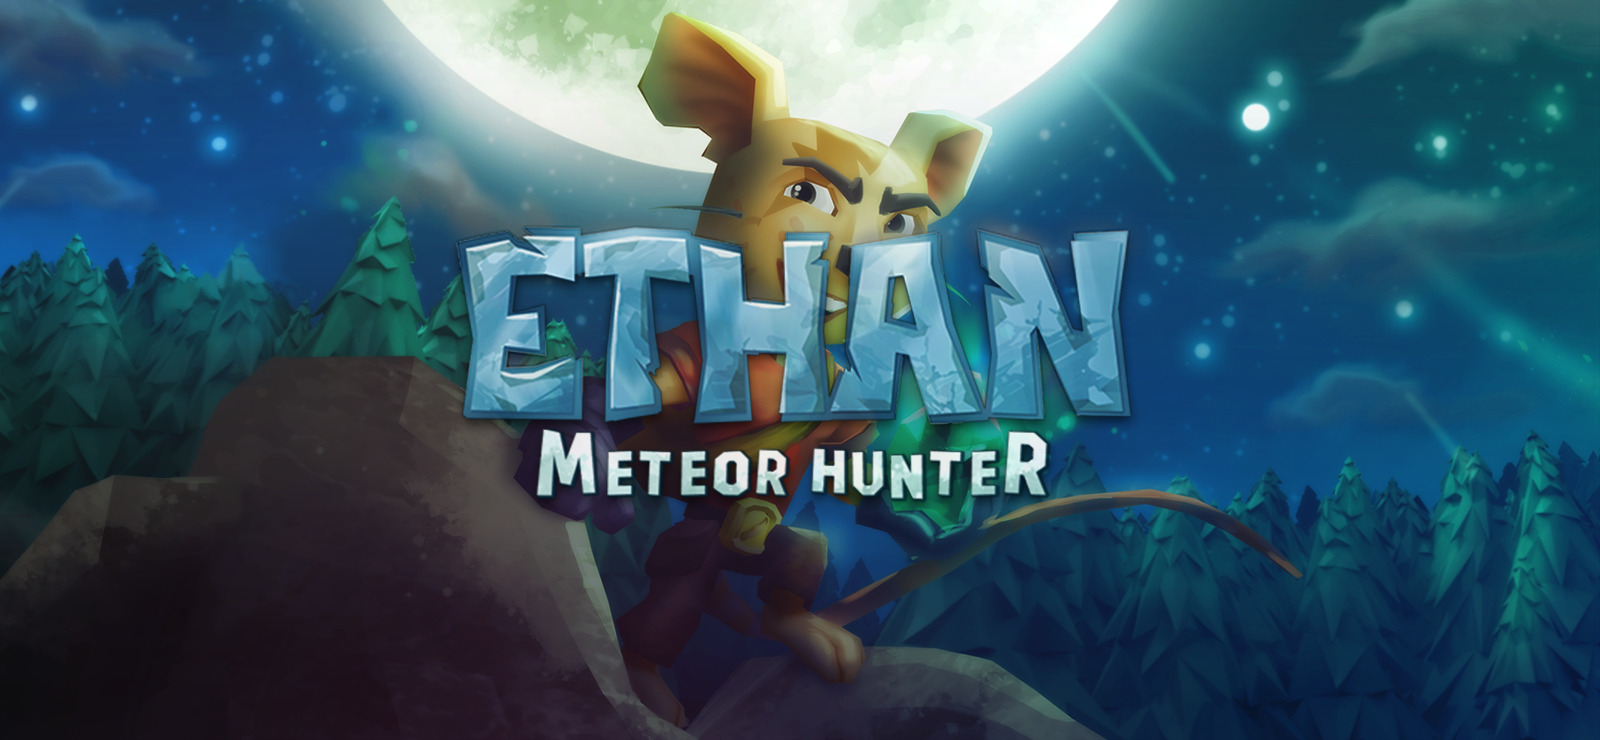 Ethan Meteor Hunter on GOG